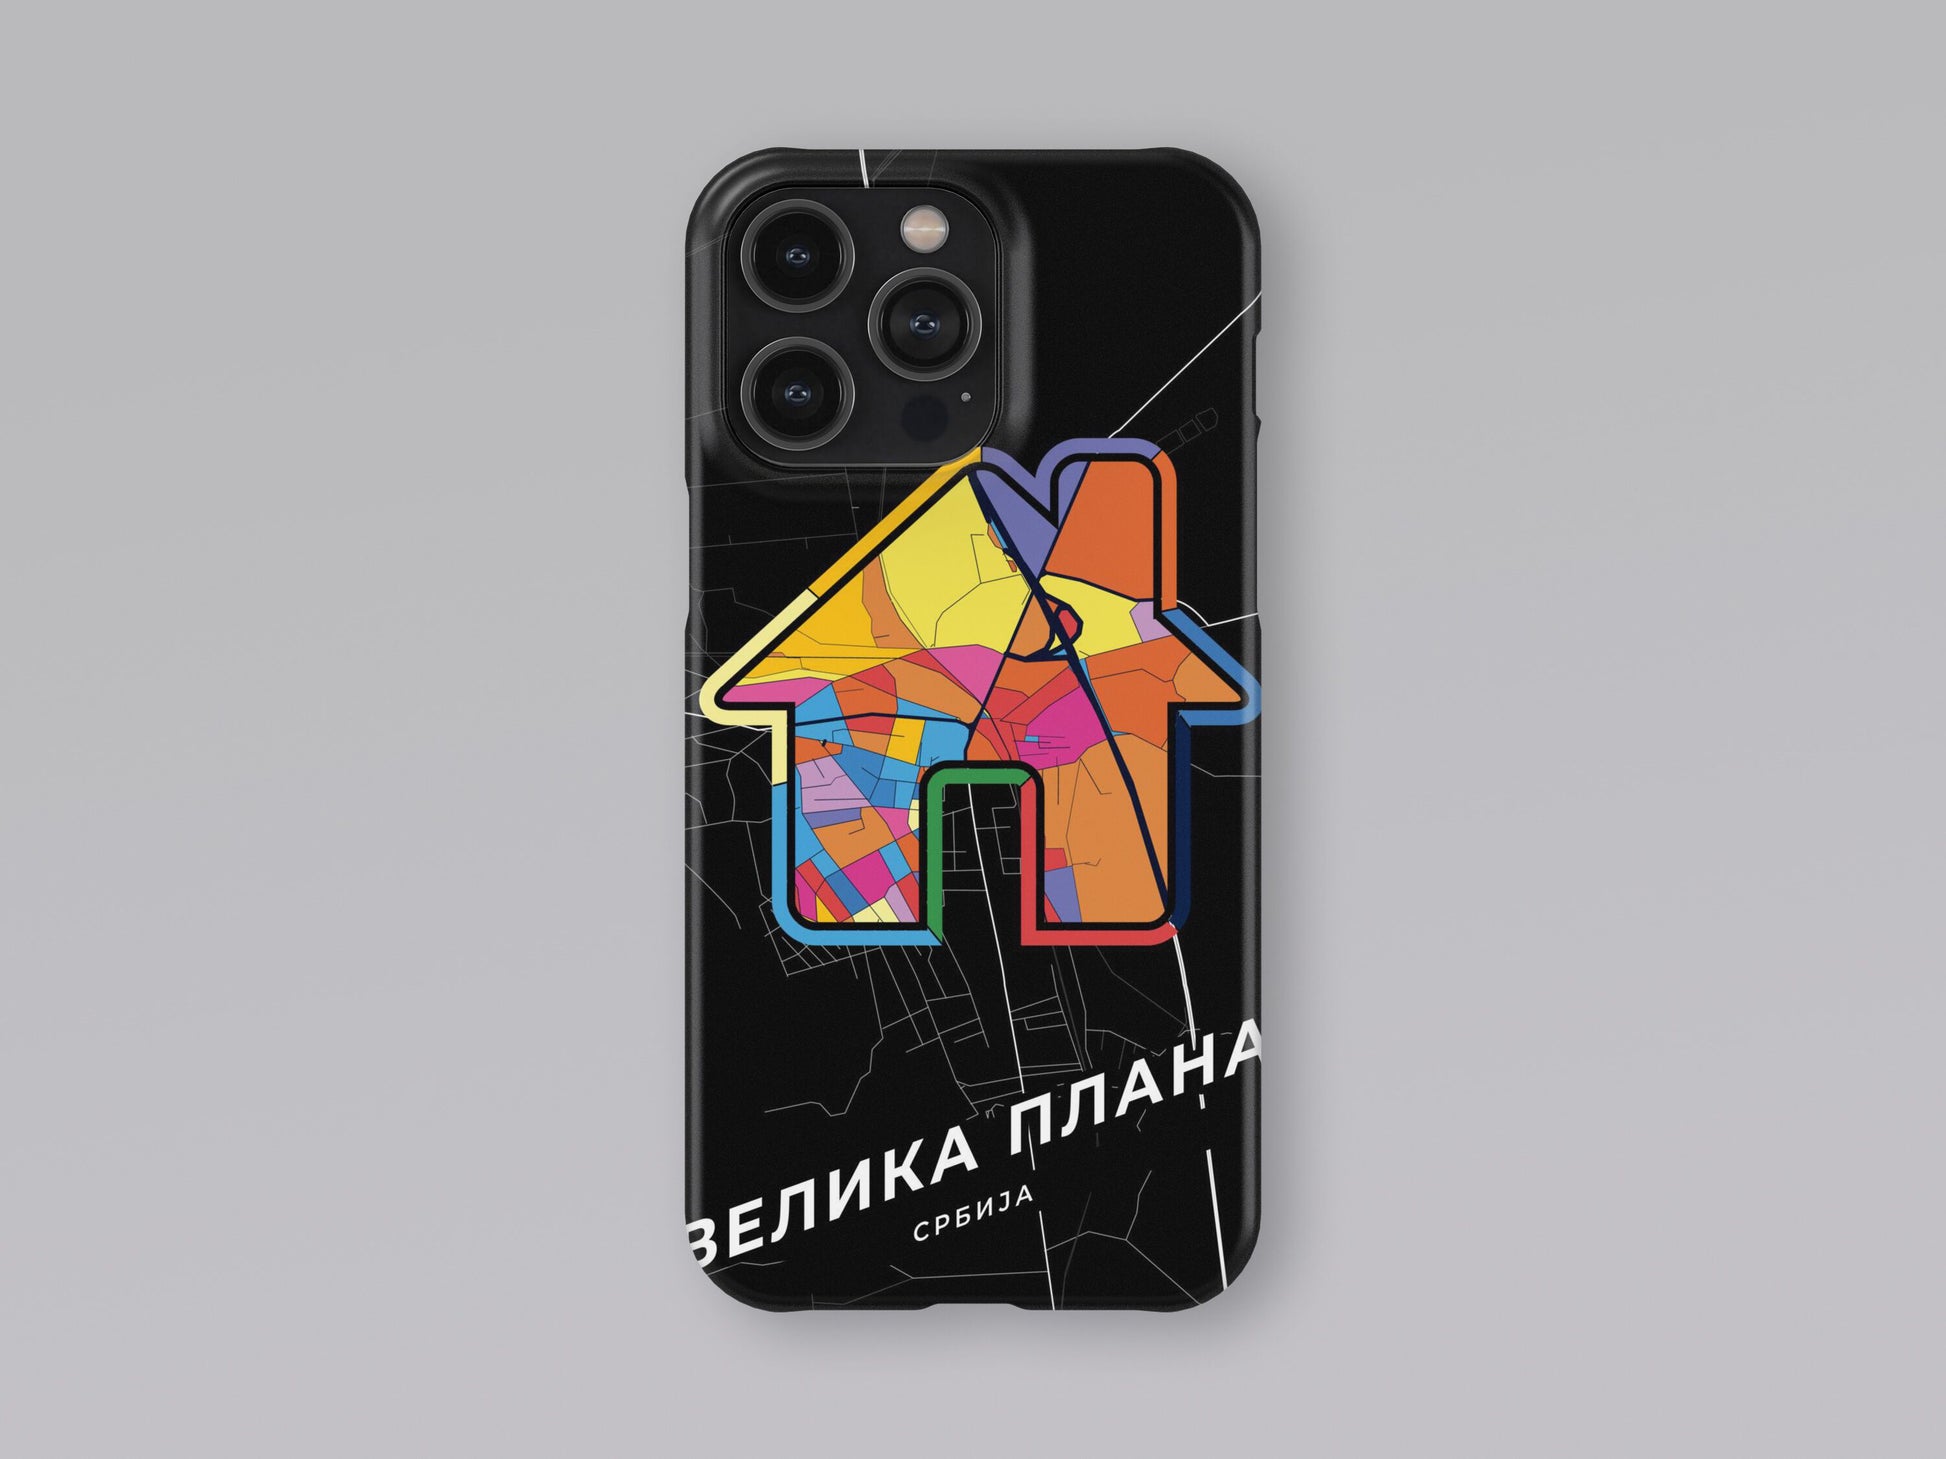 Velika Plana Serbia slim phone case with colorful icon 3